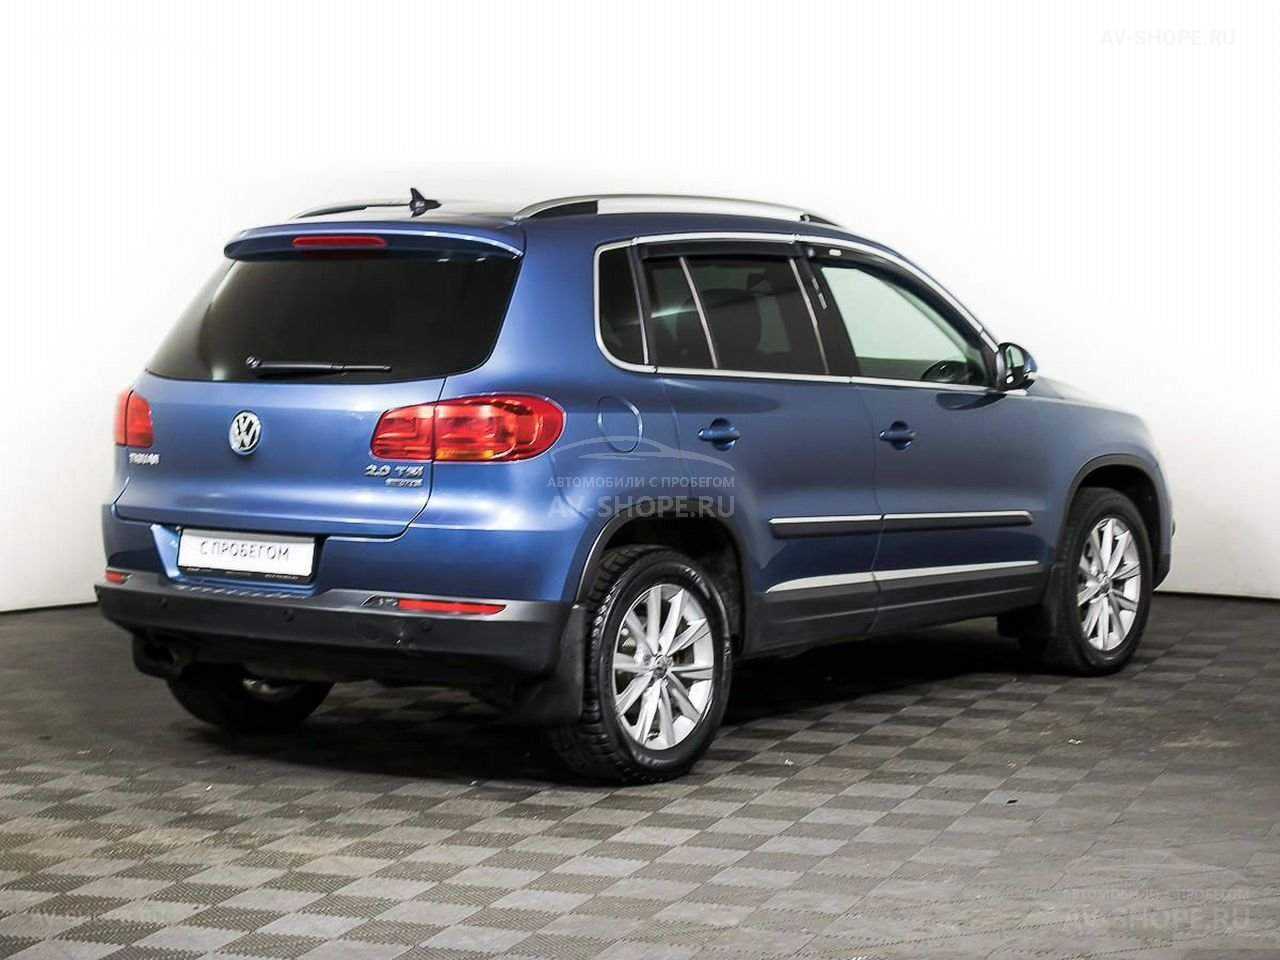 Volkswagen tiguan 2.0 at. Тигуан 2.0 Рестайлинг. Volkswagen Tiguan 2012 темно серый. Фольксваген Тигуан 2 литра 170 л.с Прошивка. Тигуан 2011 2.0 170 л.с цена.